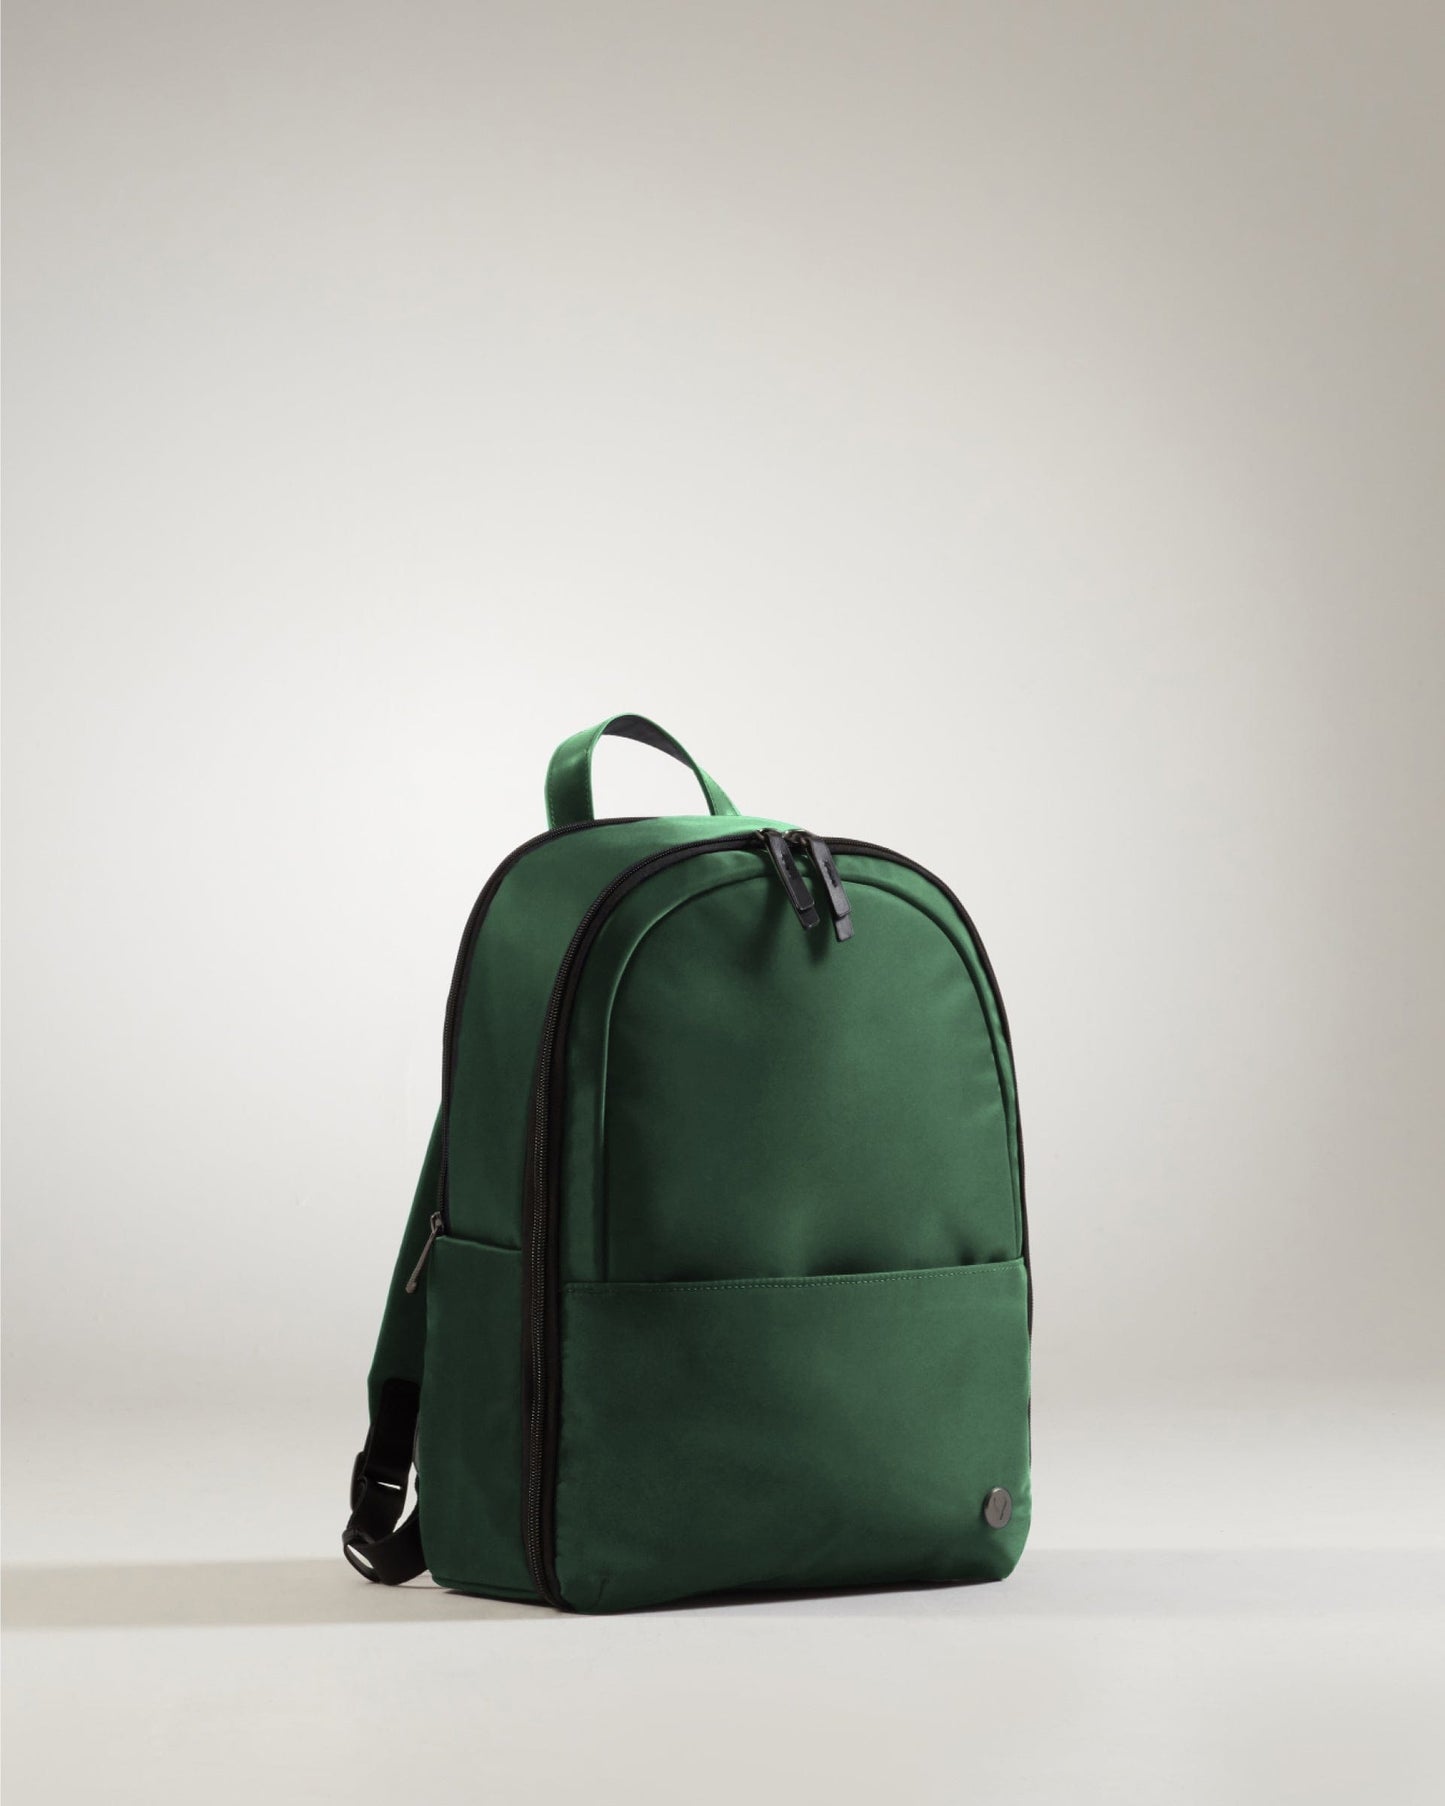 Antler Luggage -  Chelsea backpack in woodland green - Backpacks Chelsea Backpack Green | Travel & Lifestyle Bags | Antler UK